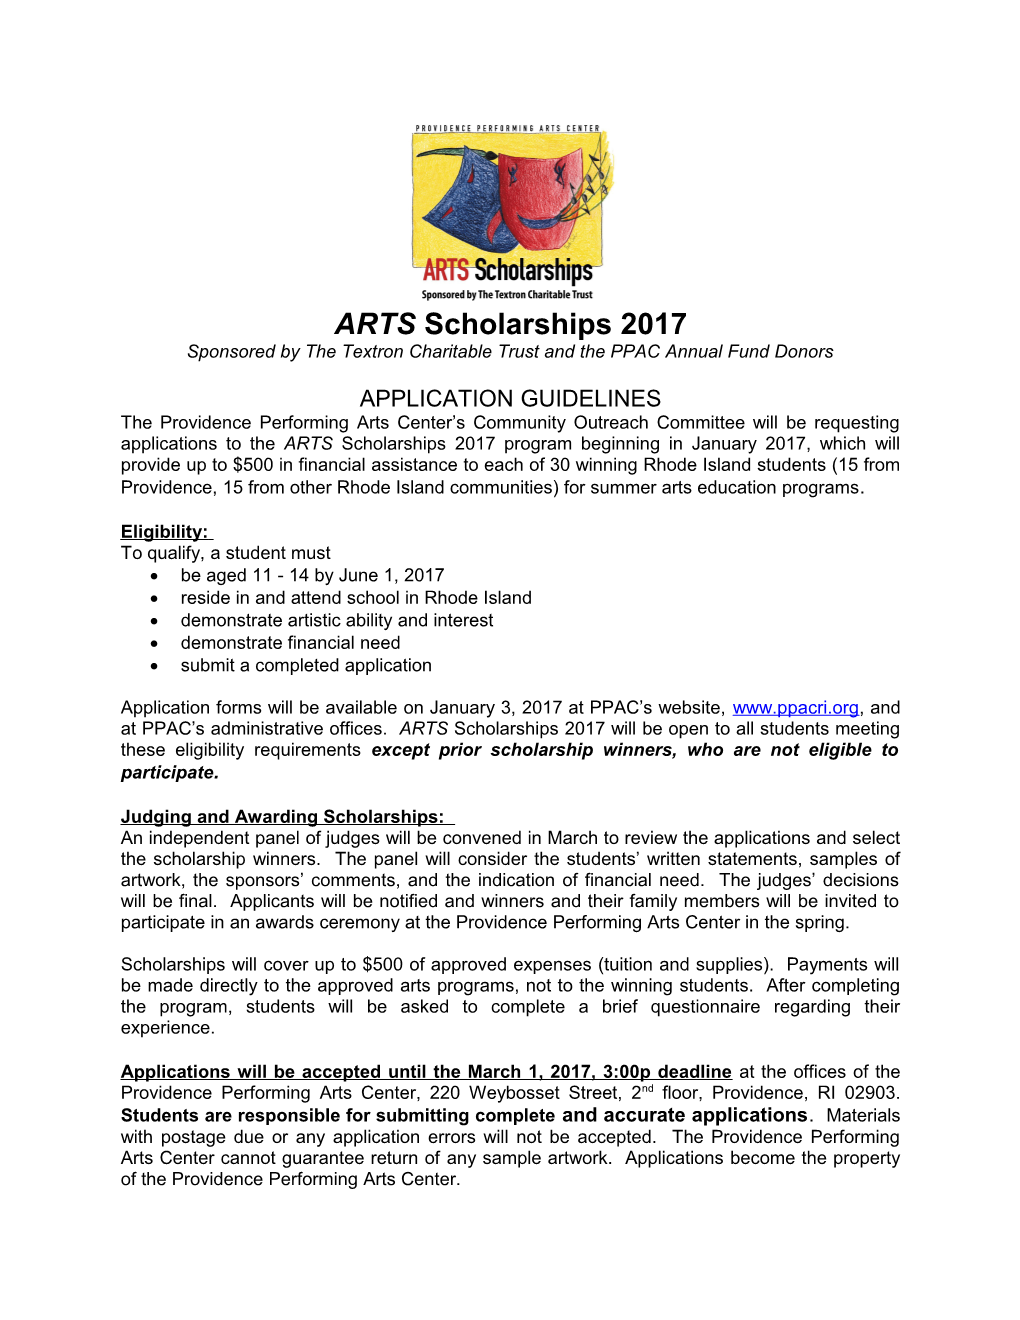 ARTS Scholarships 2017